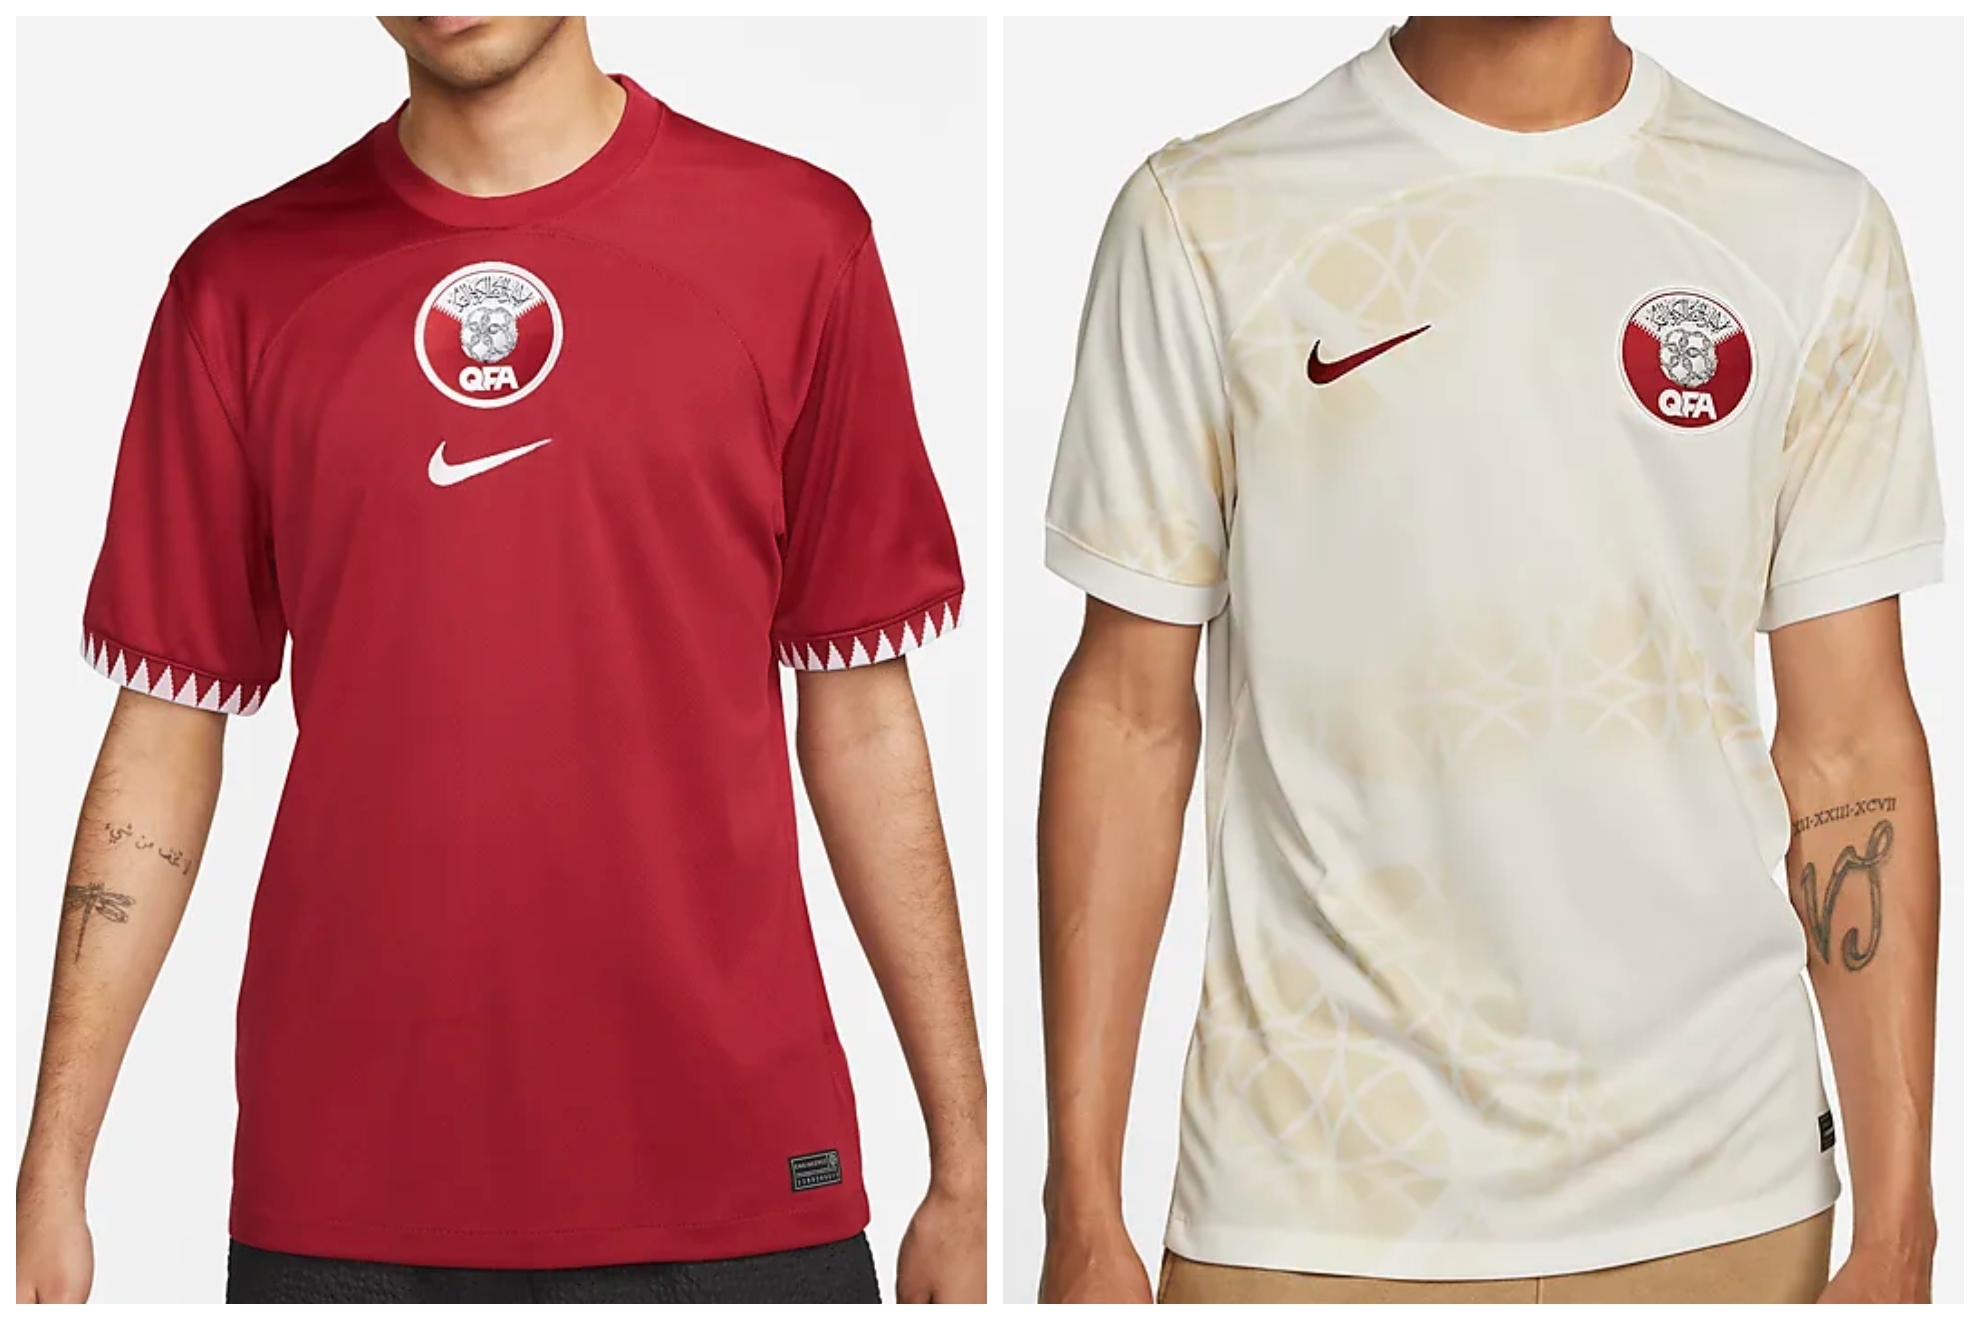 Los uniformes de Qatar para el Mundial de Qatar